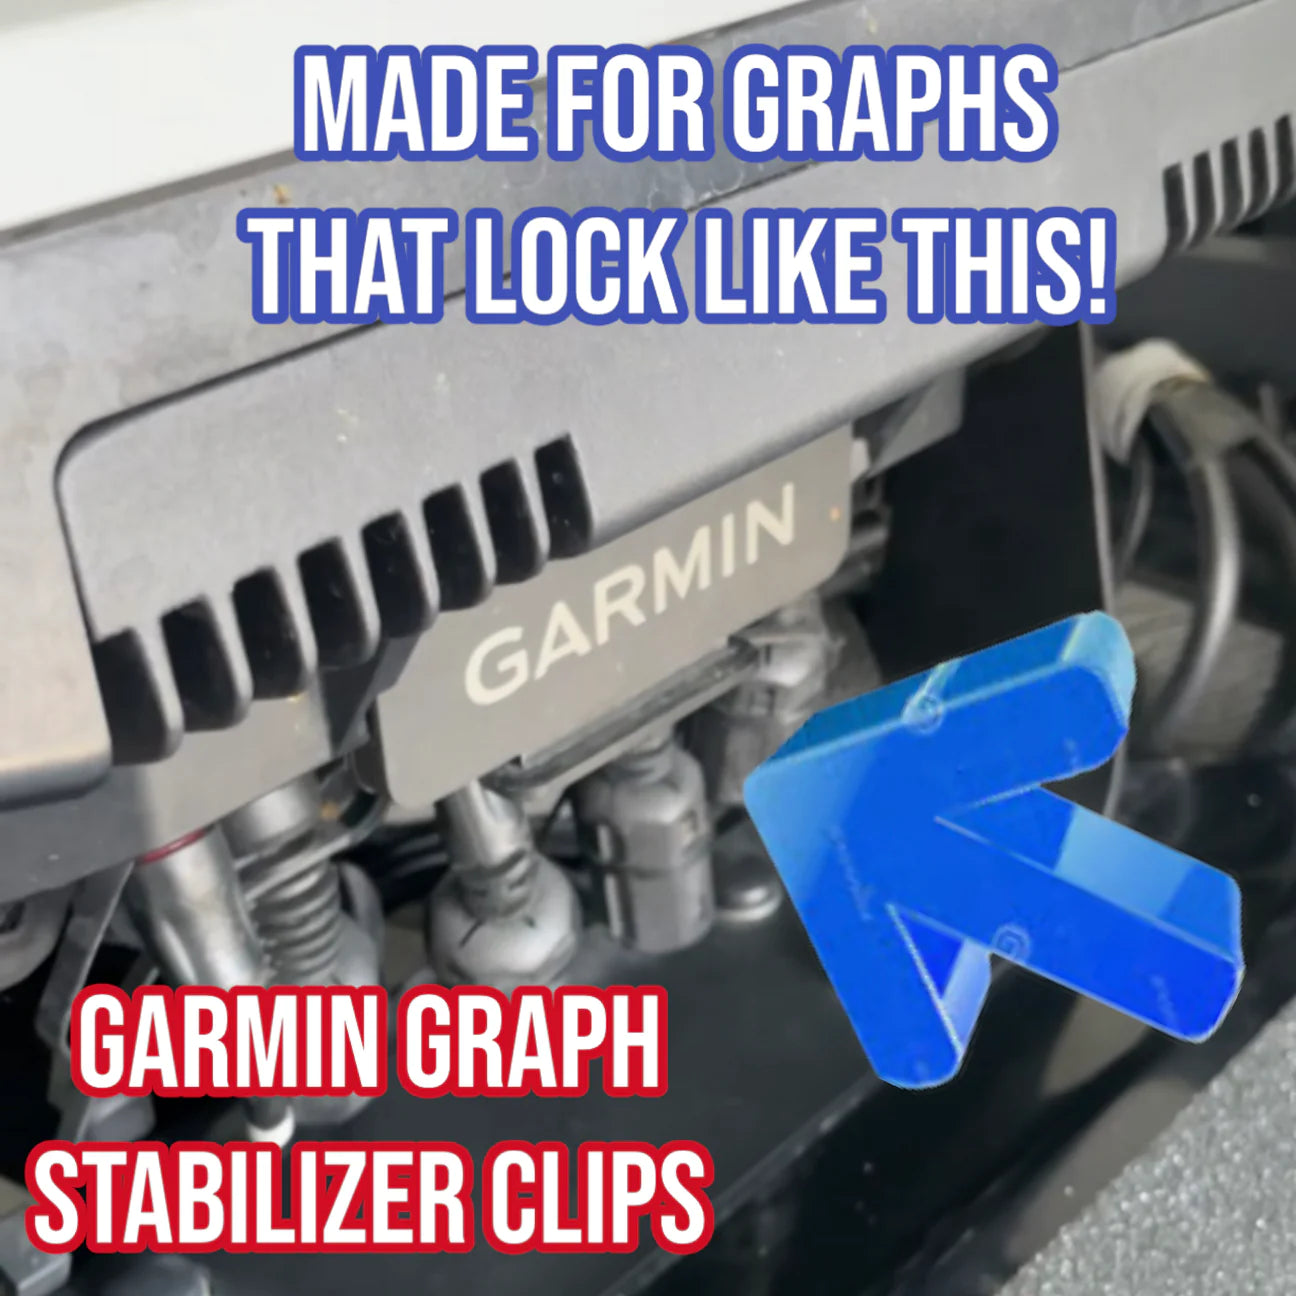 Garmin Stabilizer Clip for Garmin Graphs